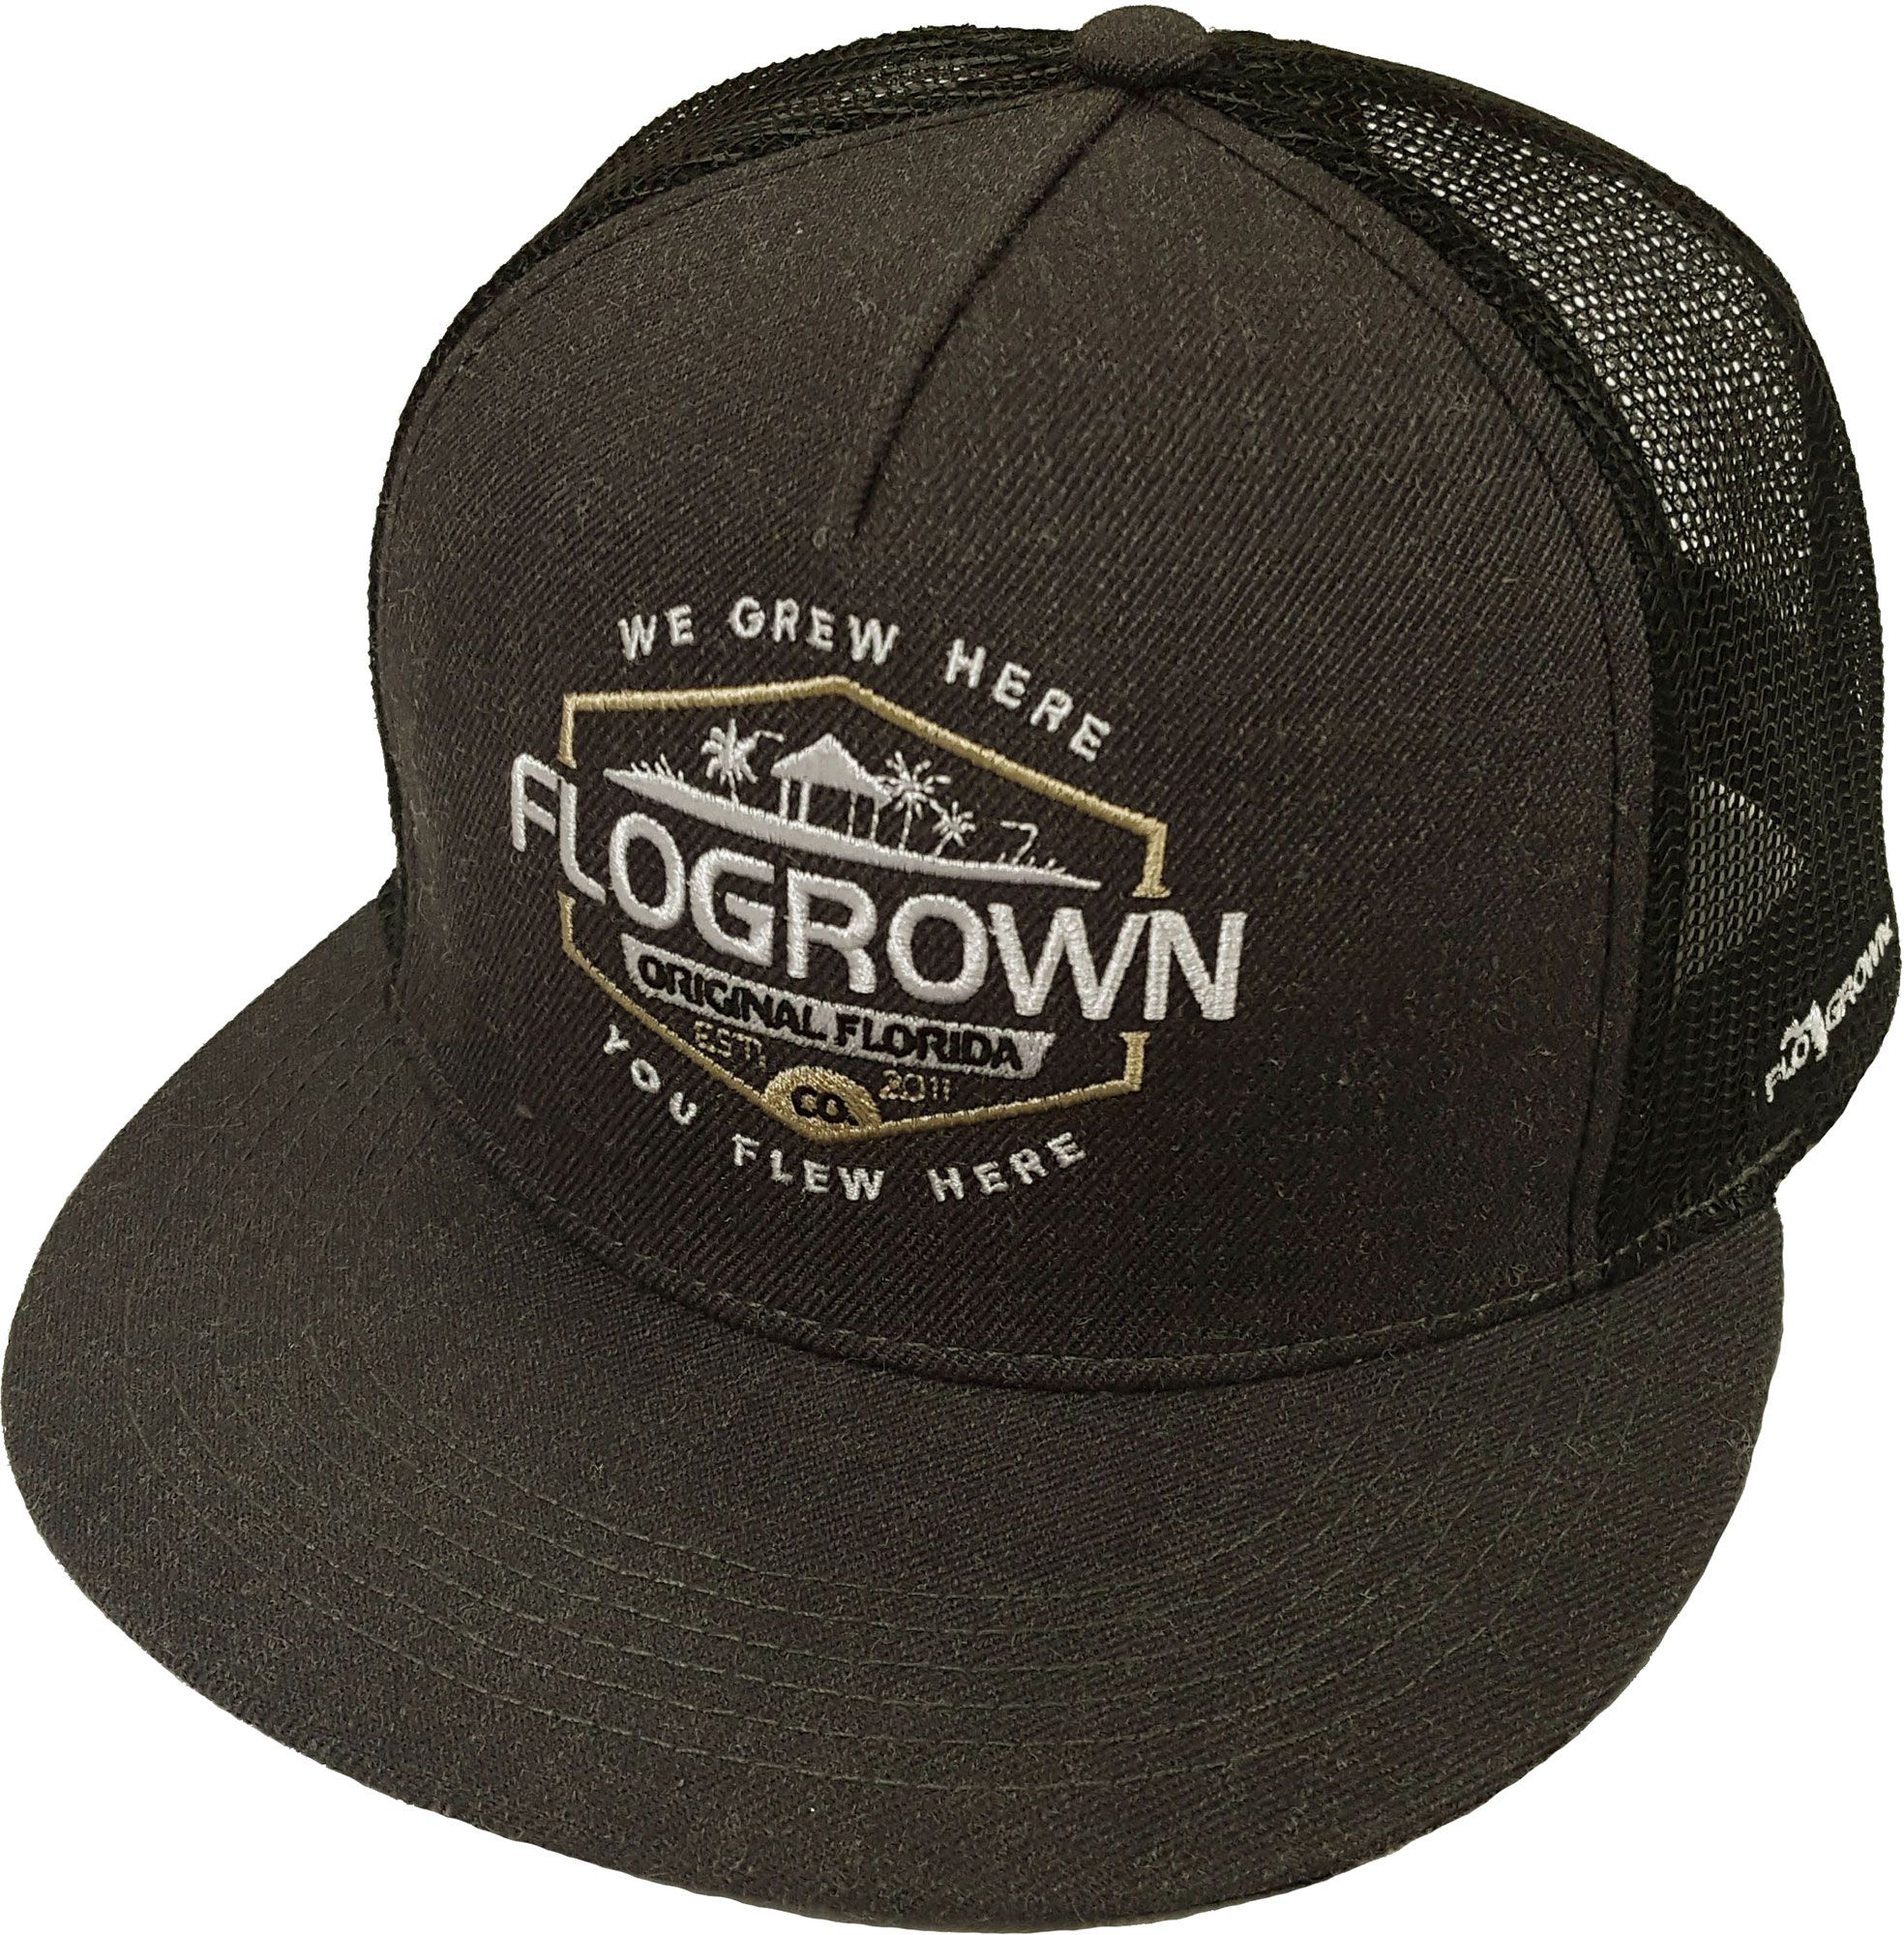 FloGrown Men's Original Floridian Trucker Hat